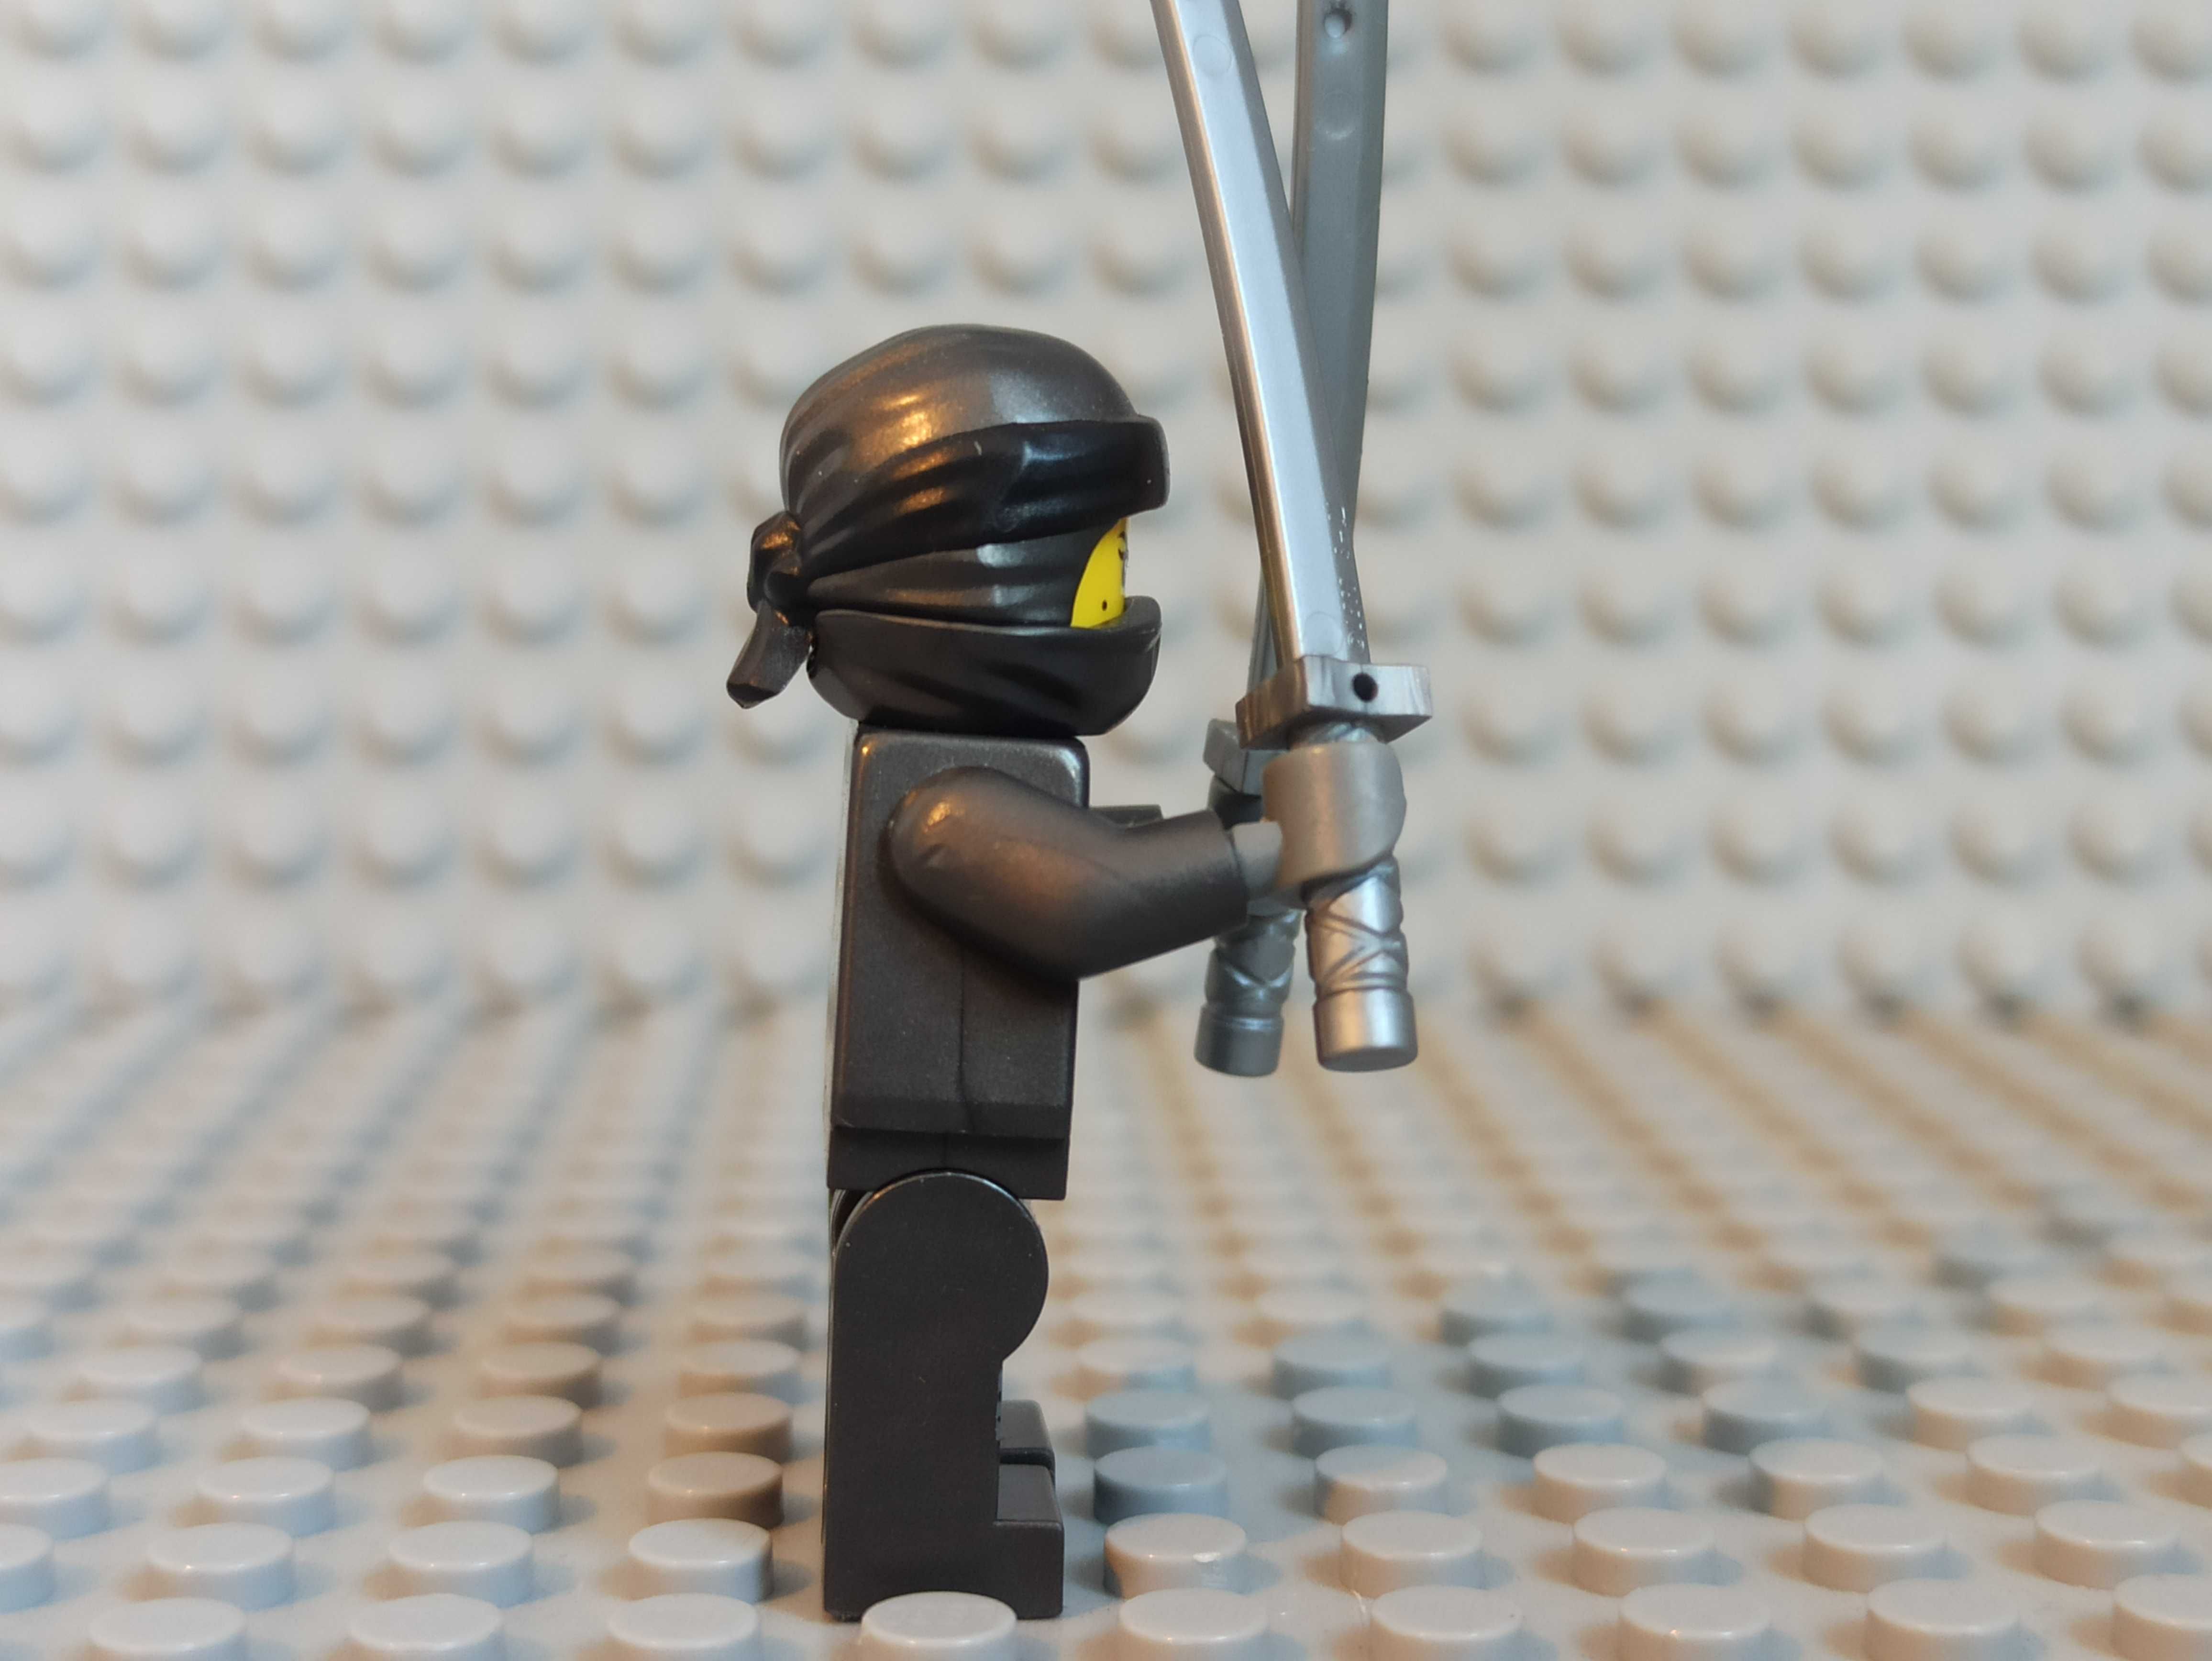 Lego Ninjago figurka Nya Sons of Garmadon njo594